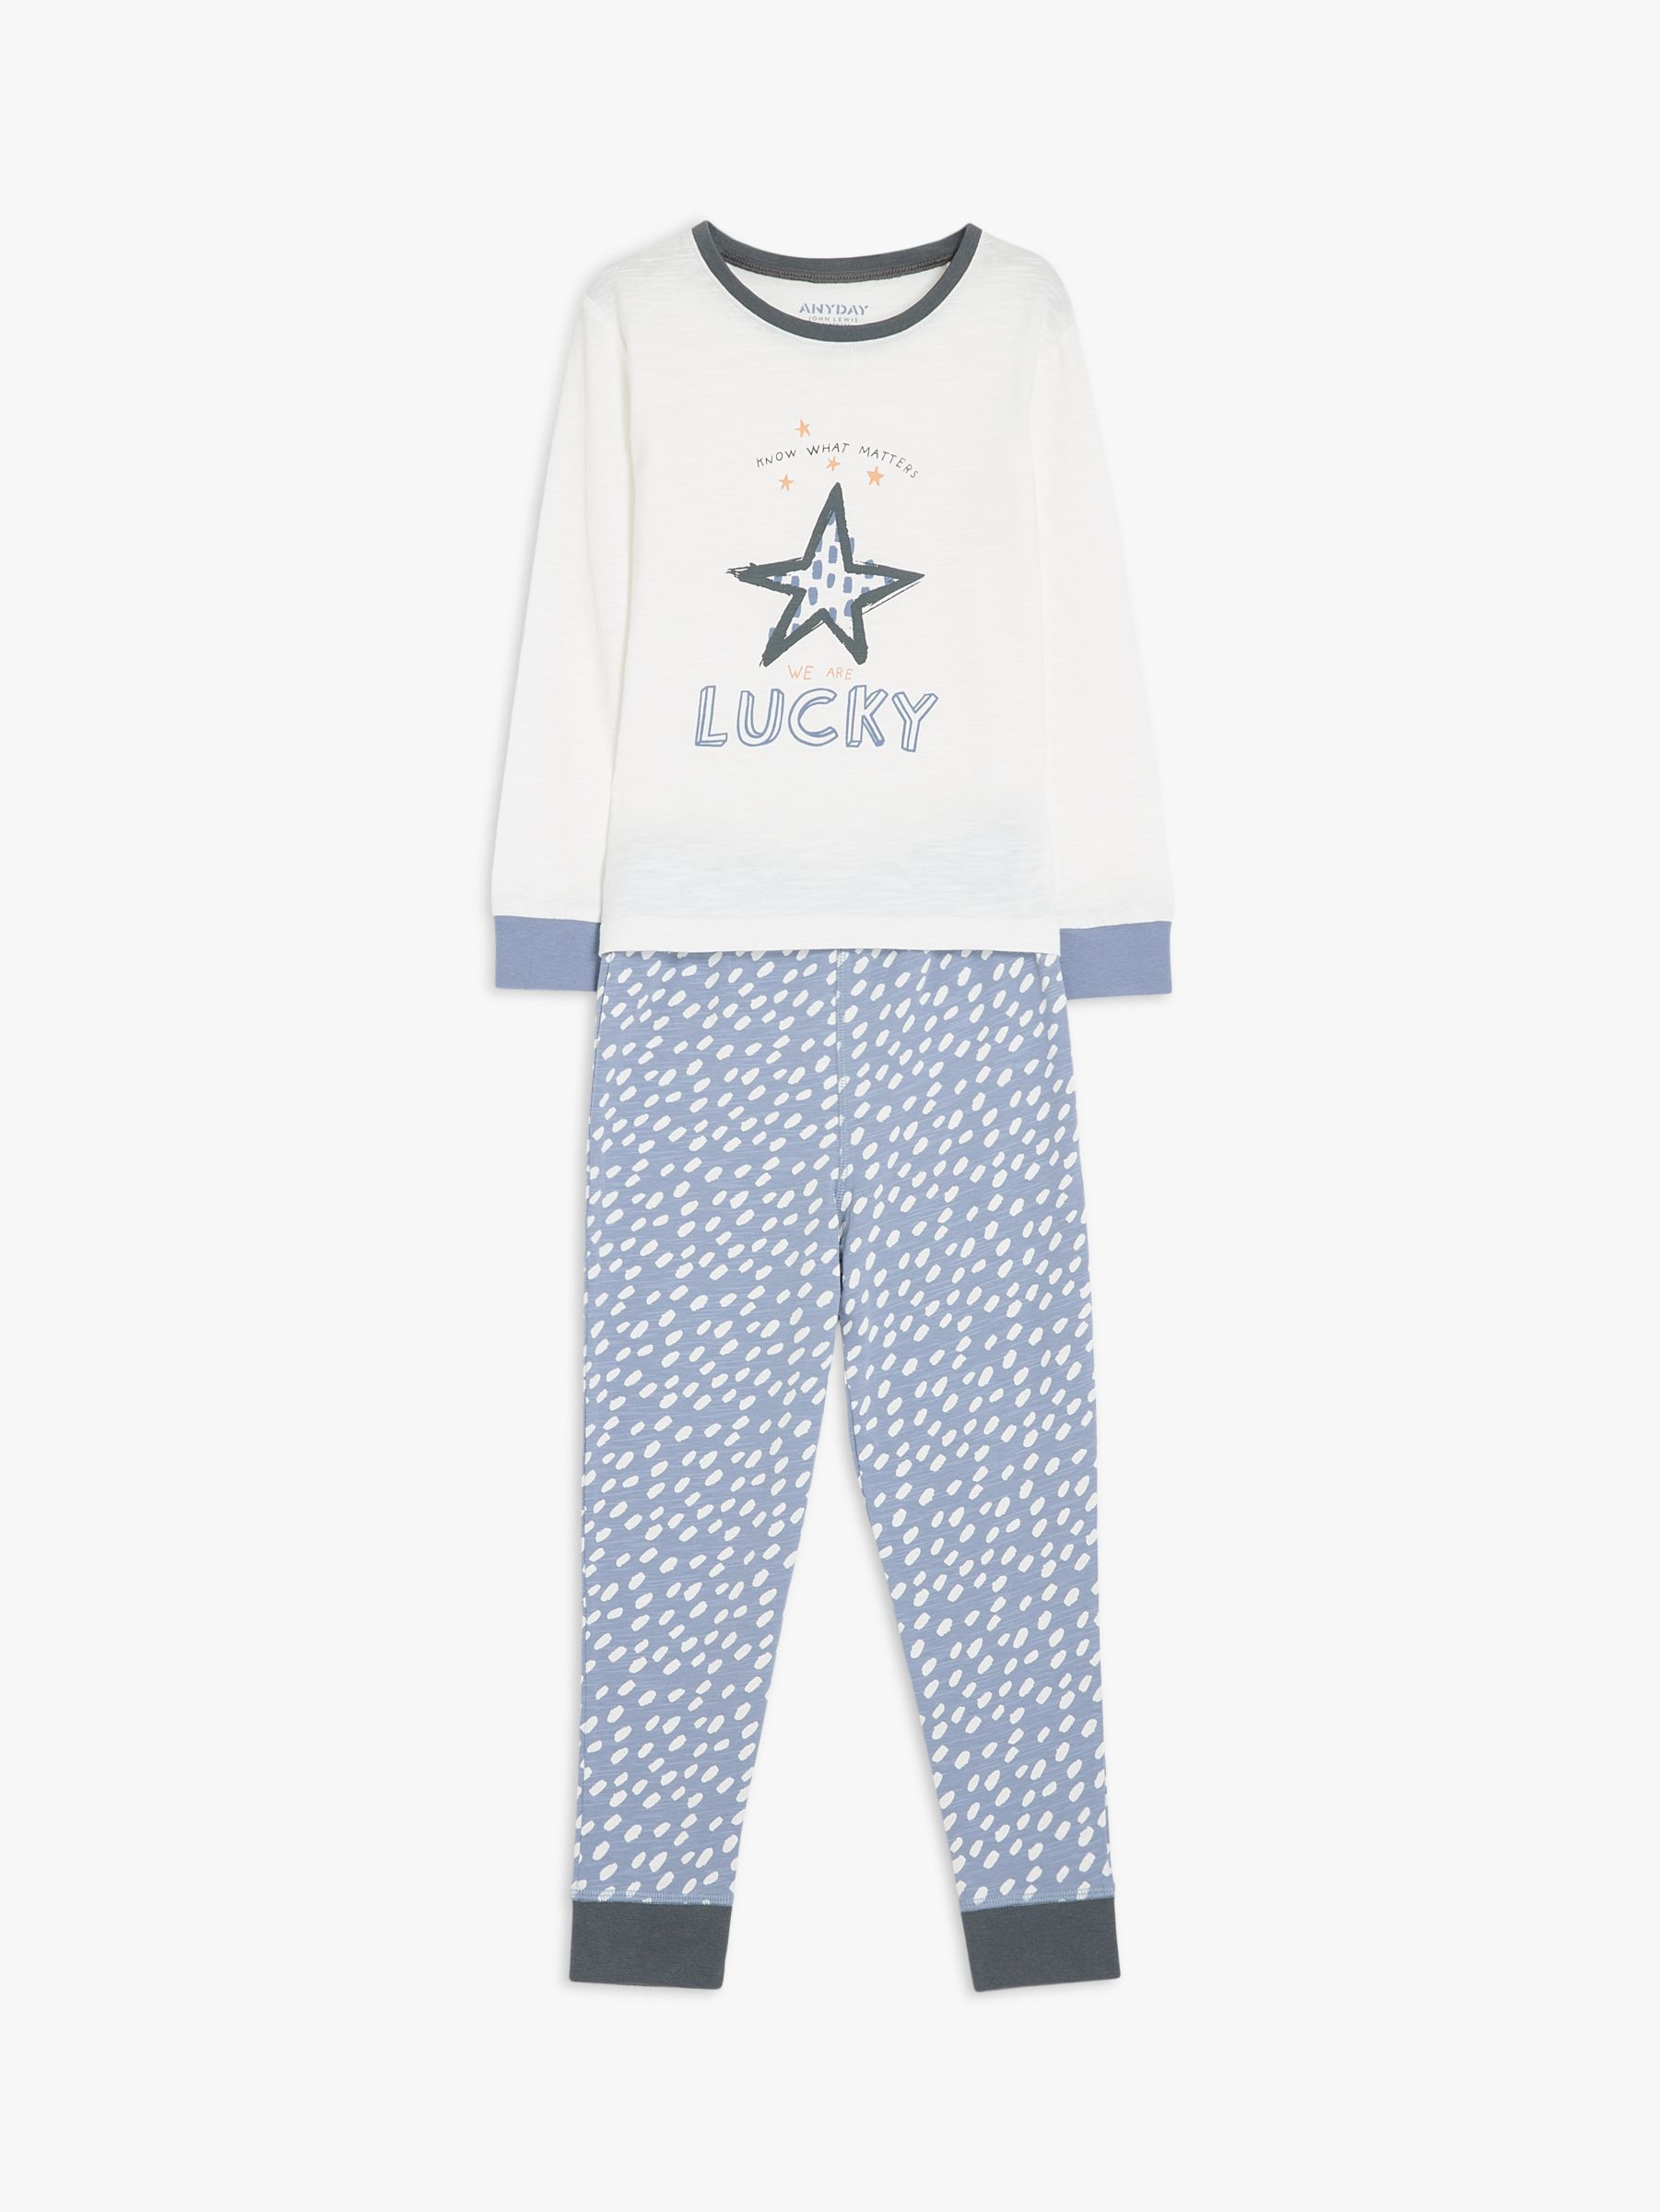 ANYDAY John Lewis & Partners Kids' Lucky Star Cotton Pyjamas, Blue/Multi